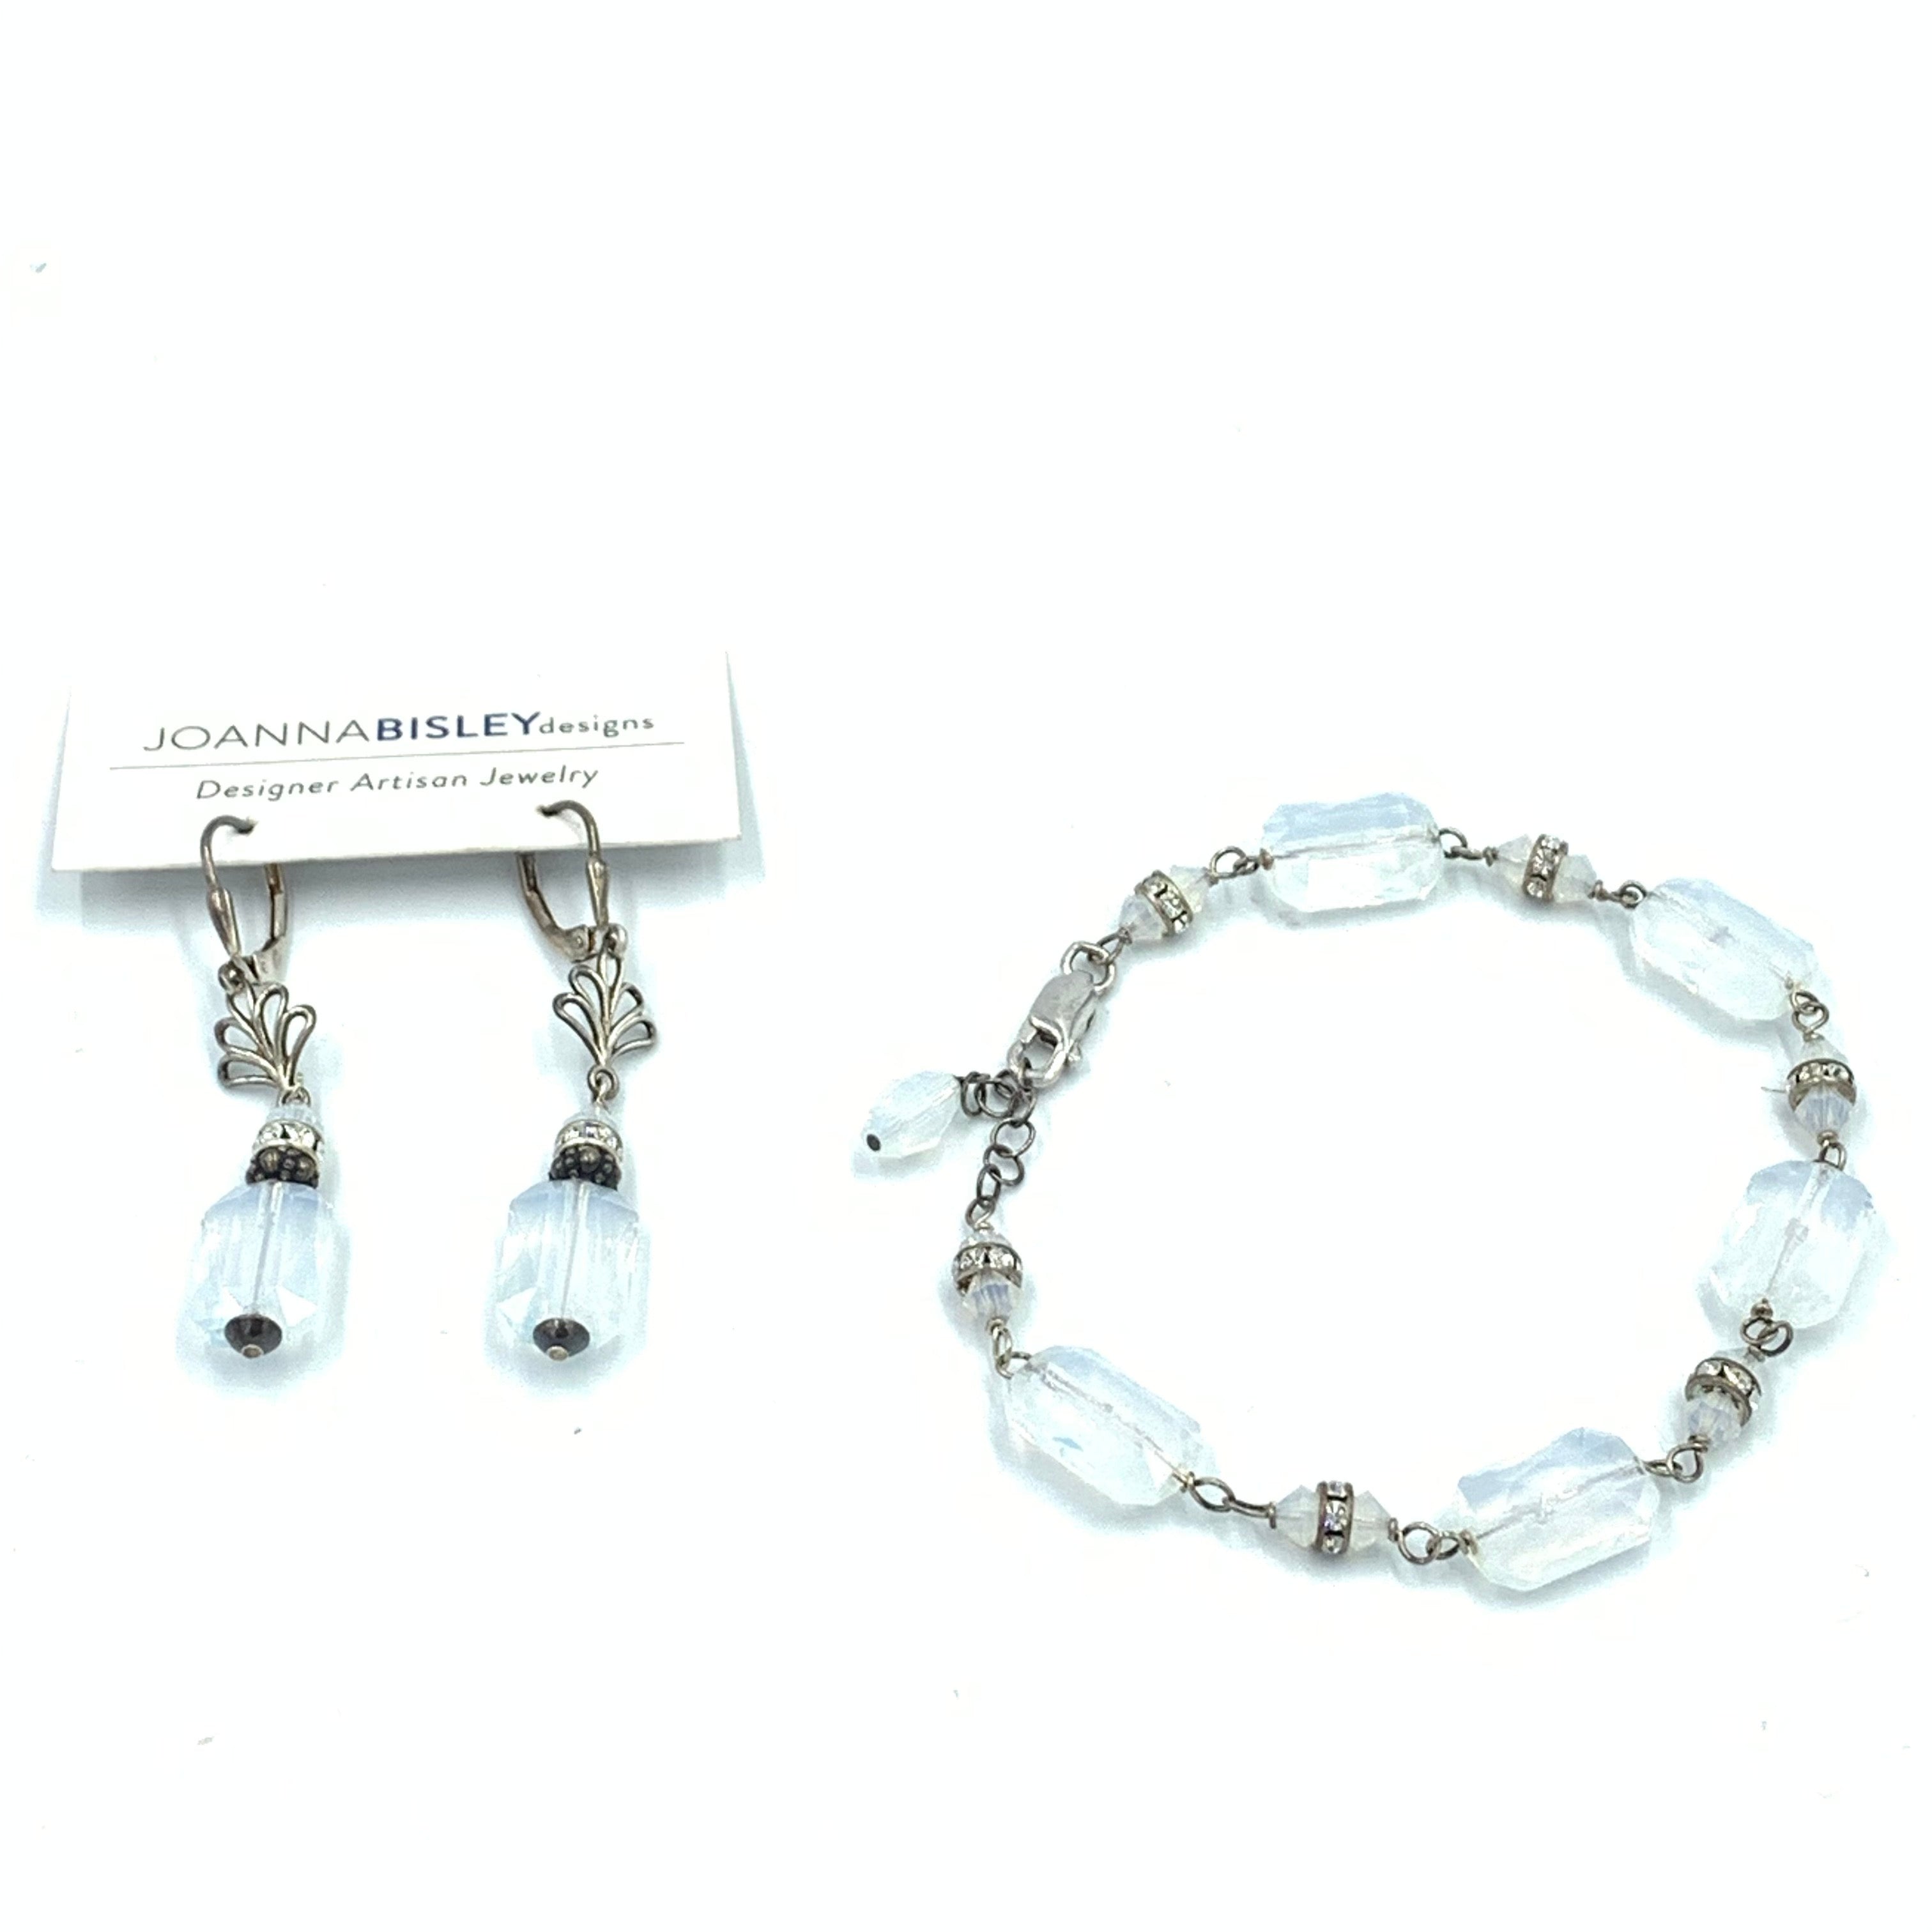 Joanna Bisley Swarovski Crystal Sterling Silver Bracelet B2307wc - 0